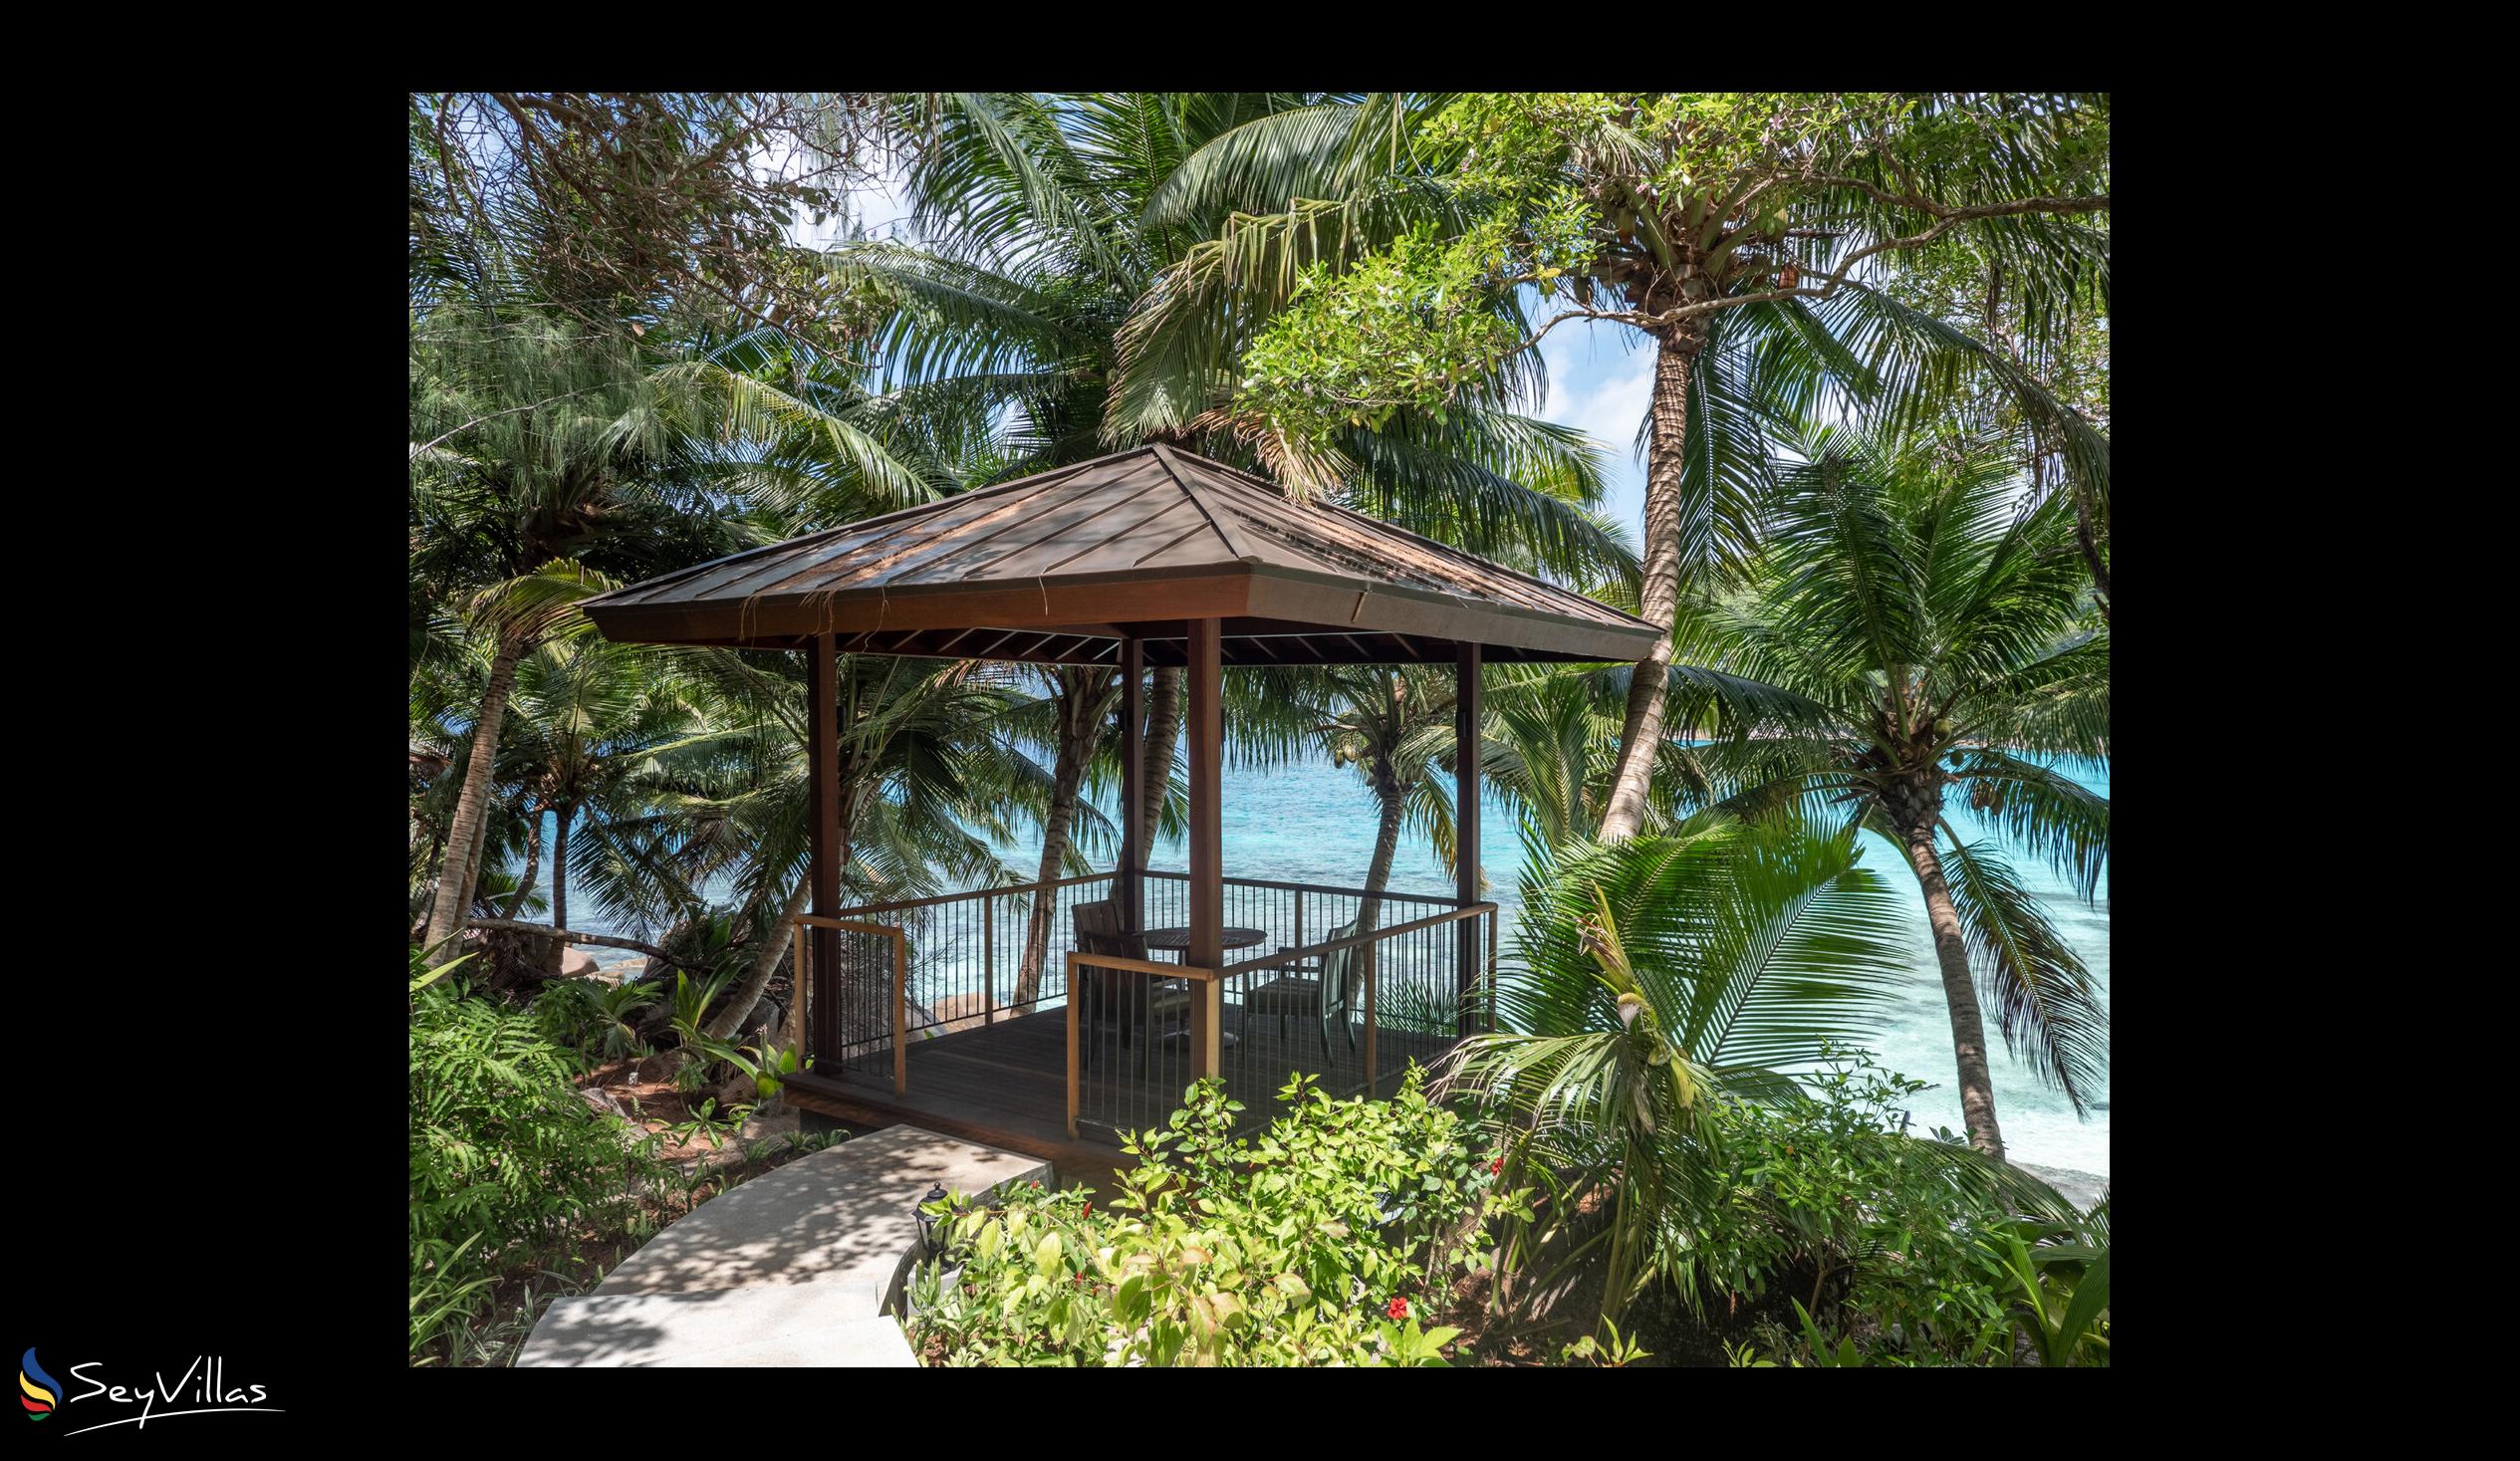 Photo 93: Four Seasons Resort - 3-Bedroom Royal Suite - Mahé (Seychelles)